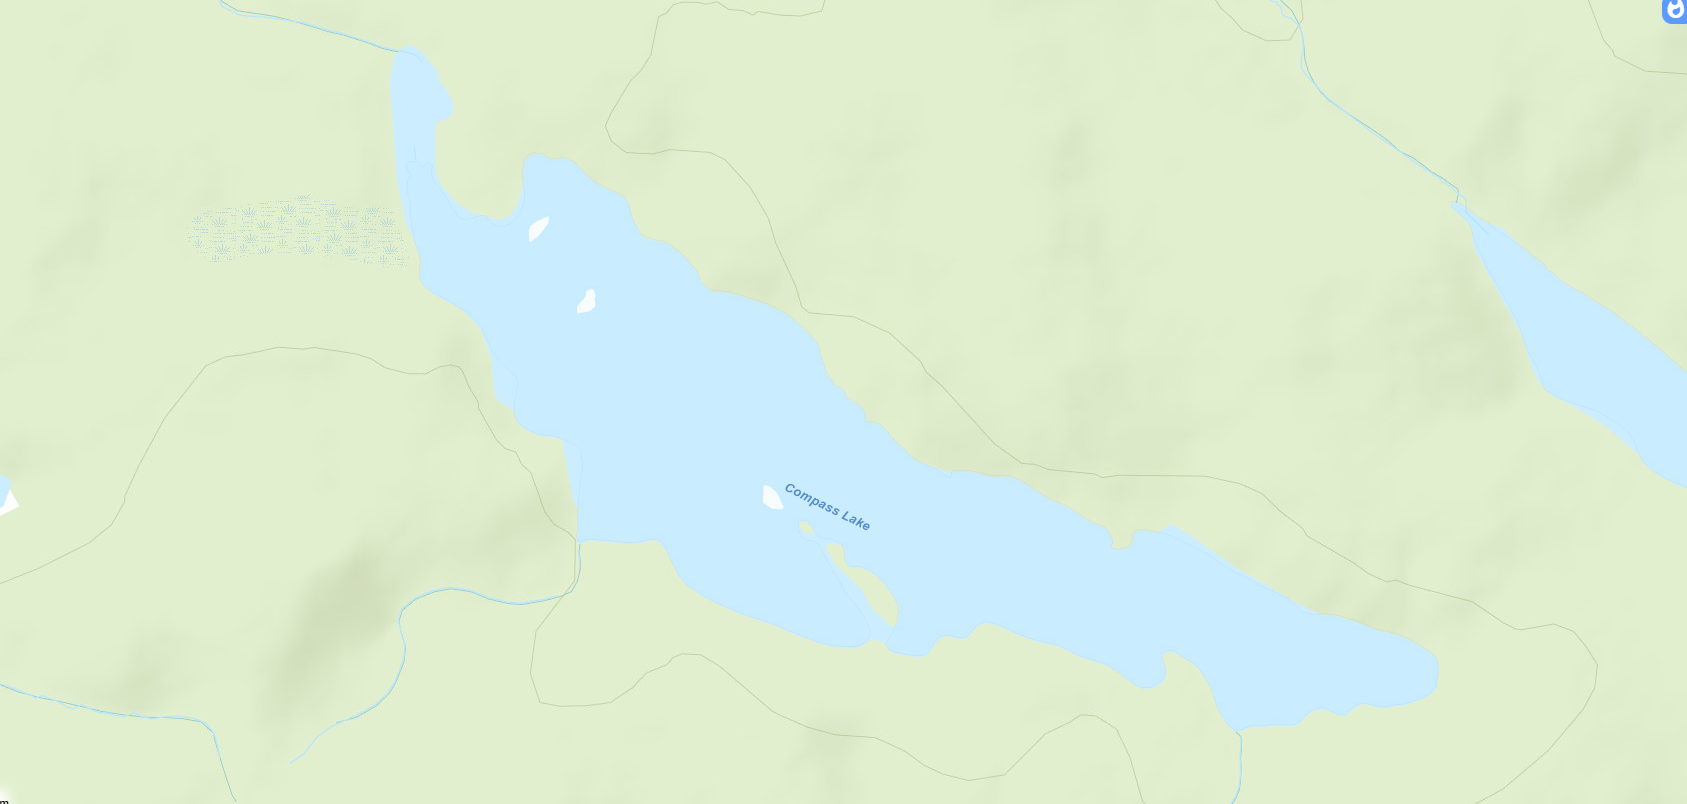 Compass Lake Cadastral Map - Compass Lake - Muskoka